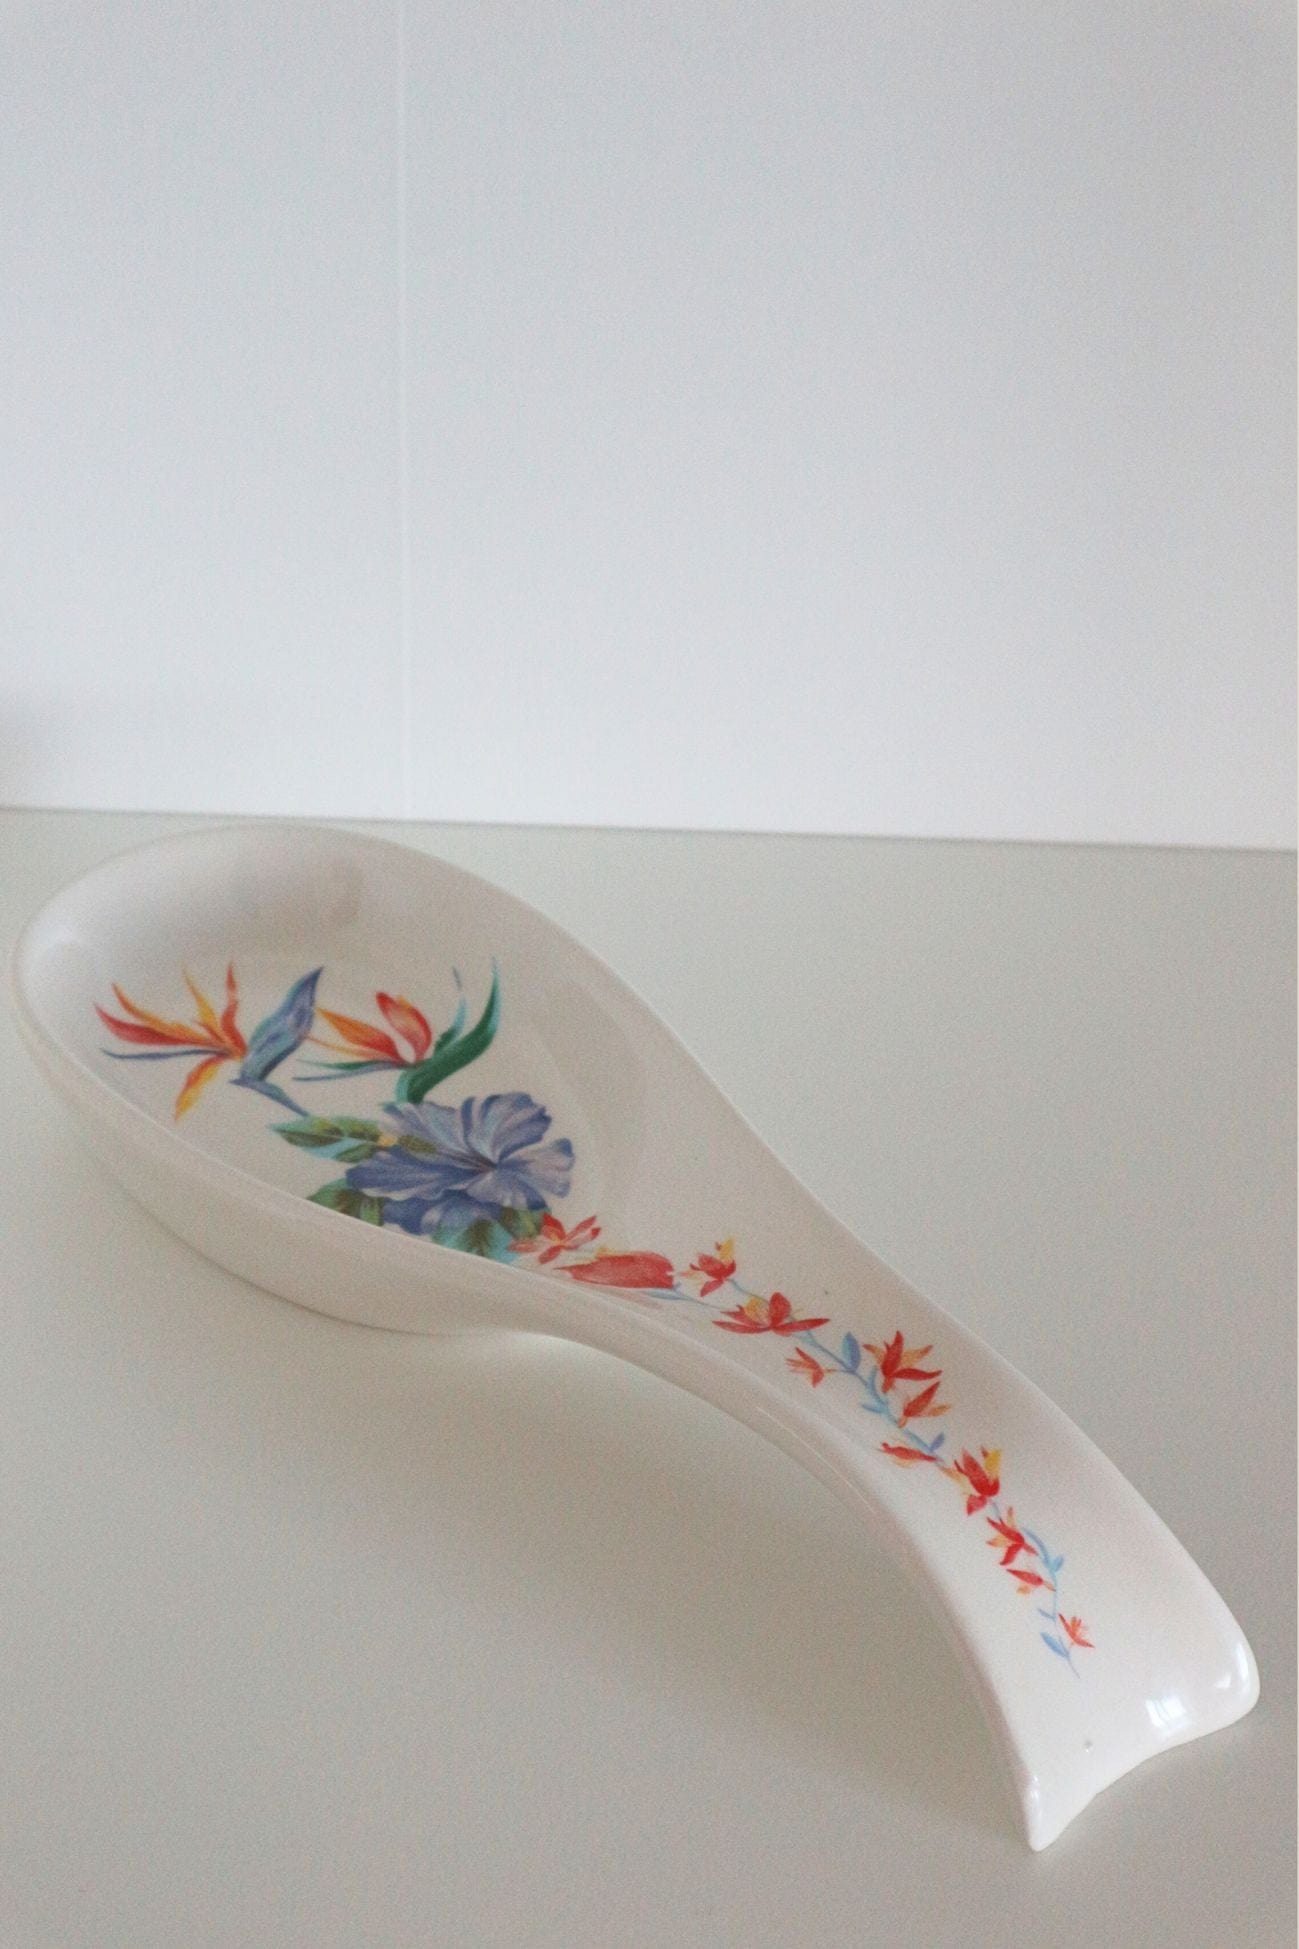 Item International Galia Galia - Poggiamestolo in ceramica bianca con motivo floreale | Item International